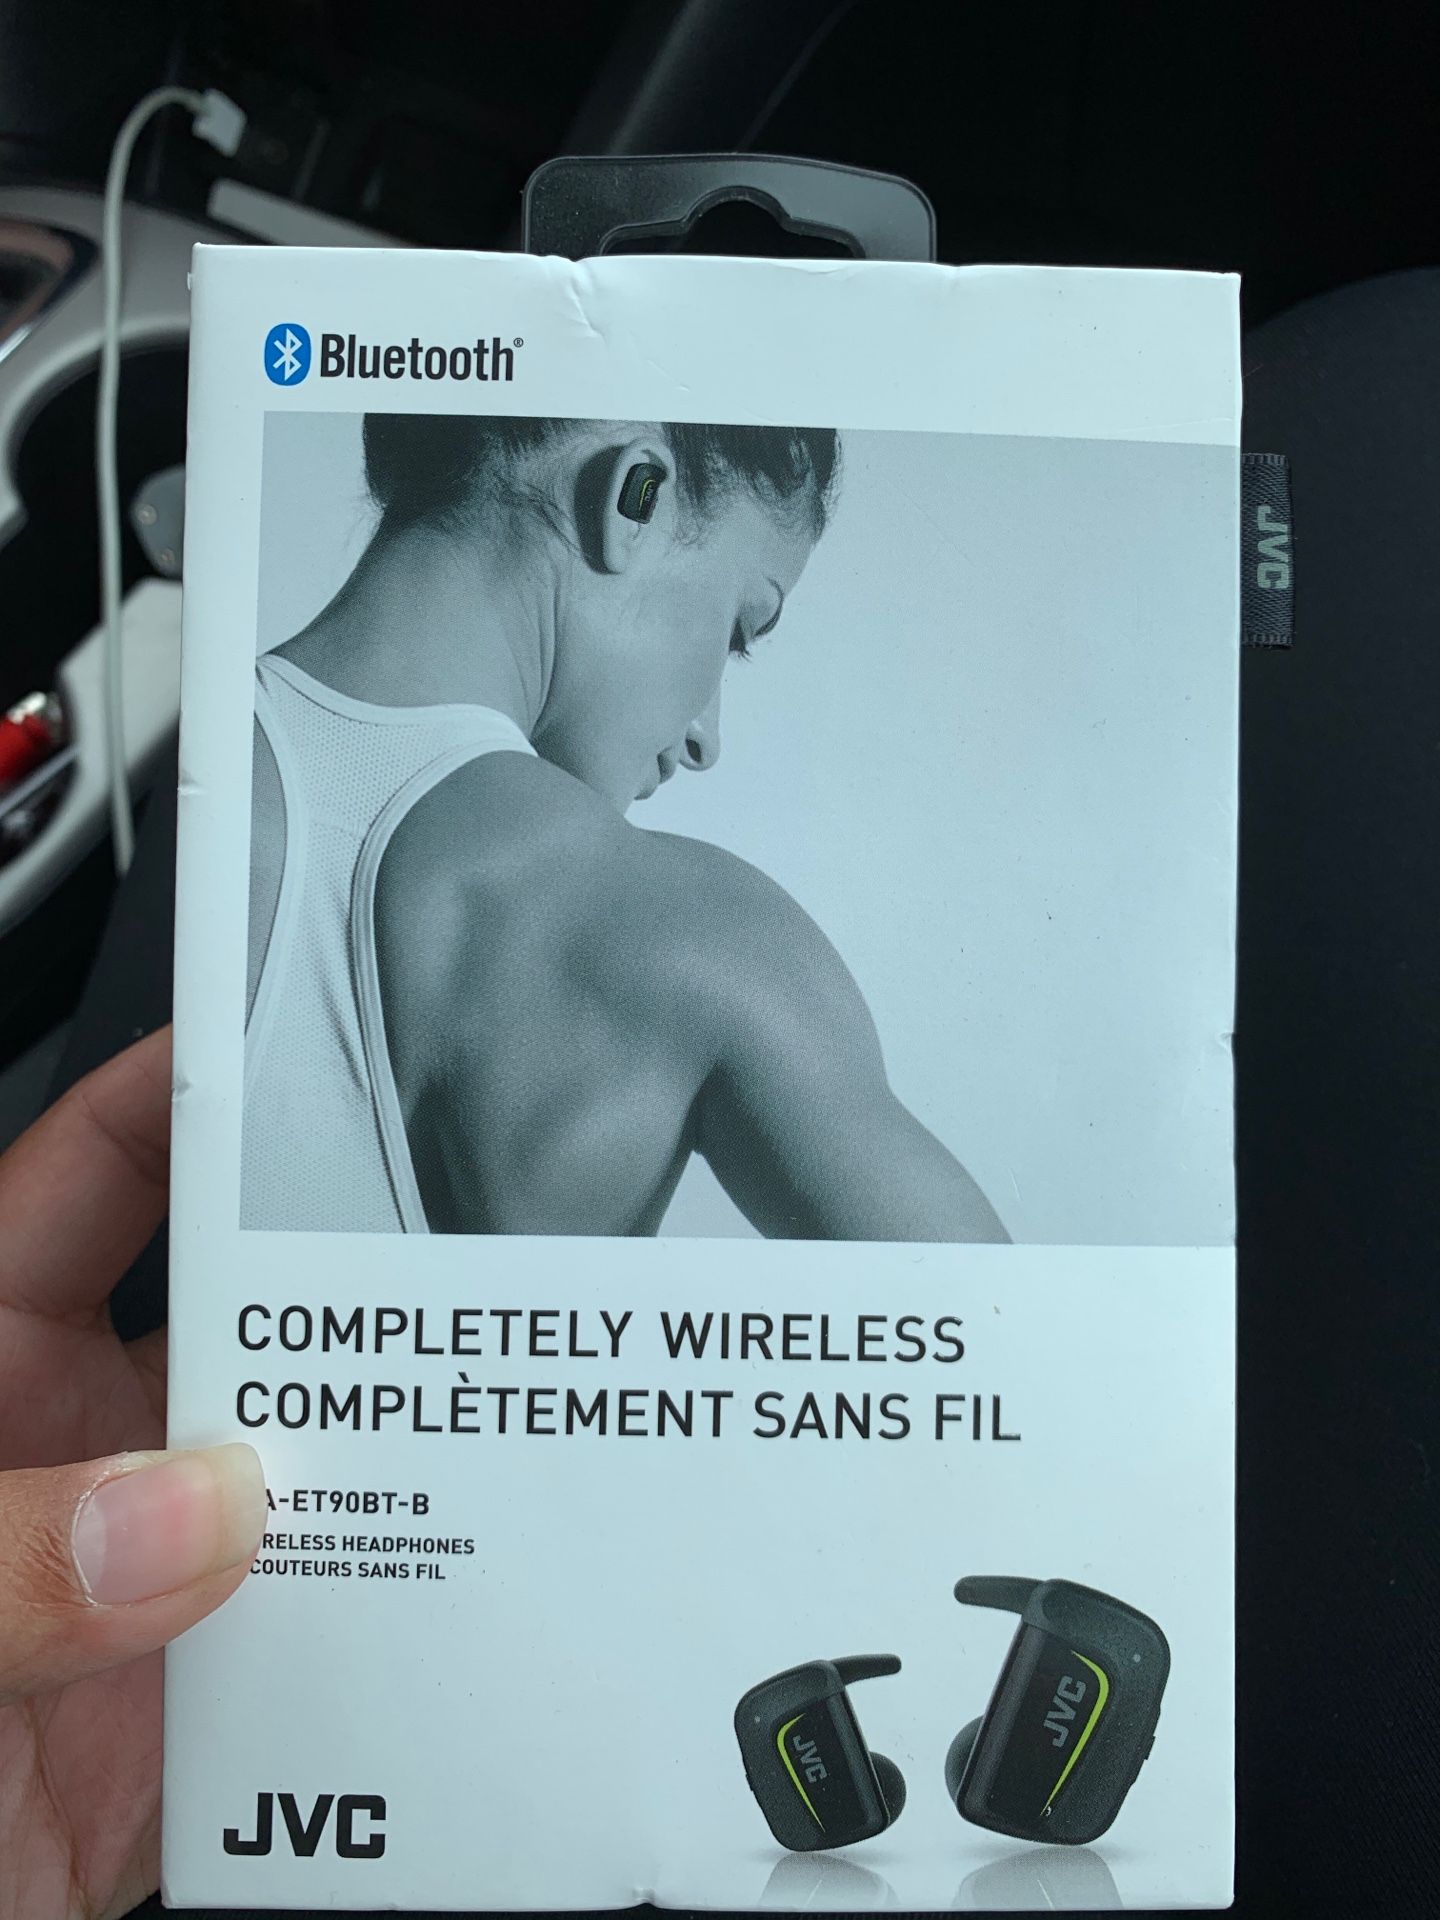 JVC True wireless earbuds for sports and fitness sweat/waterproof IPX5 Bluetooth